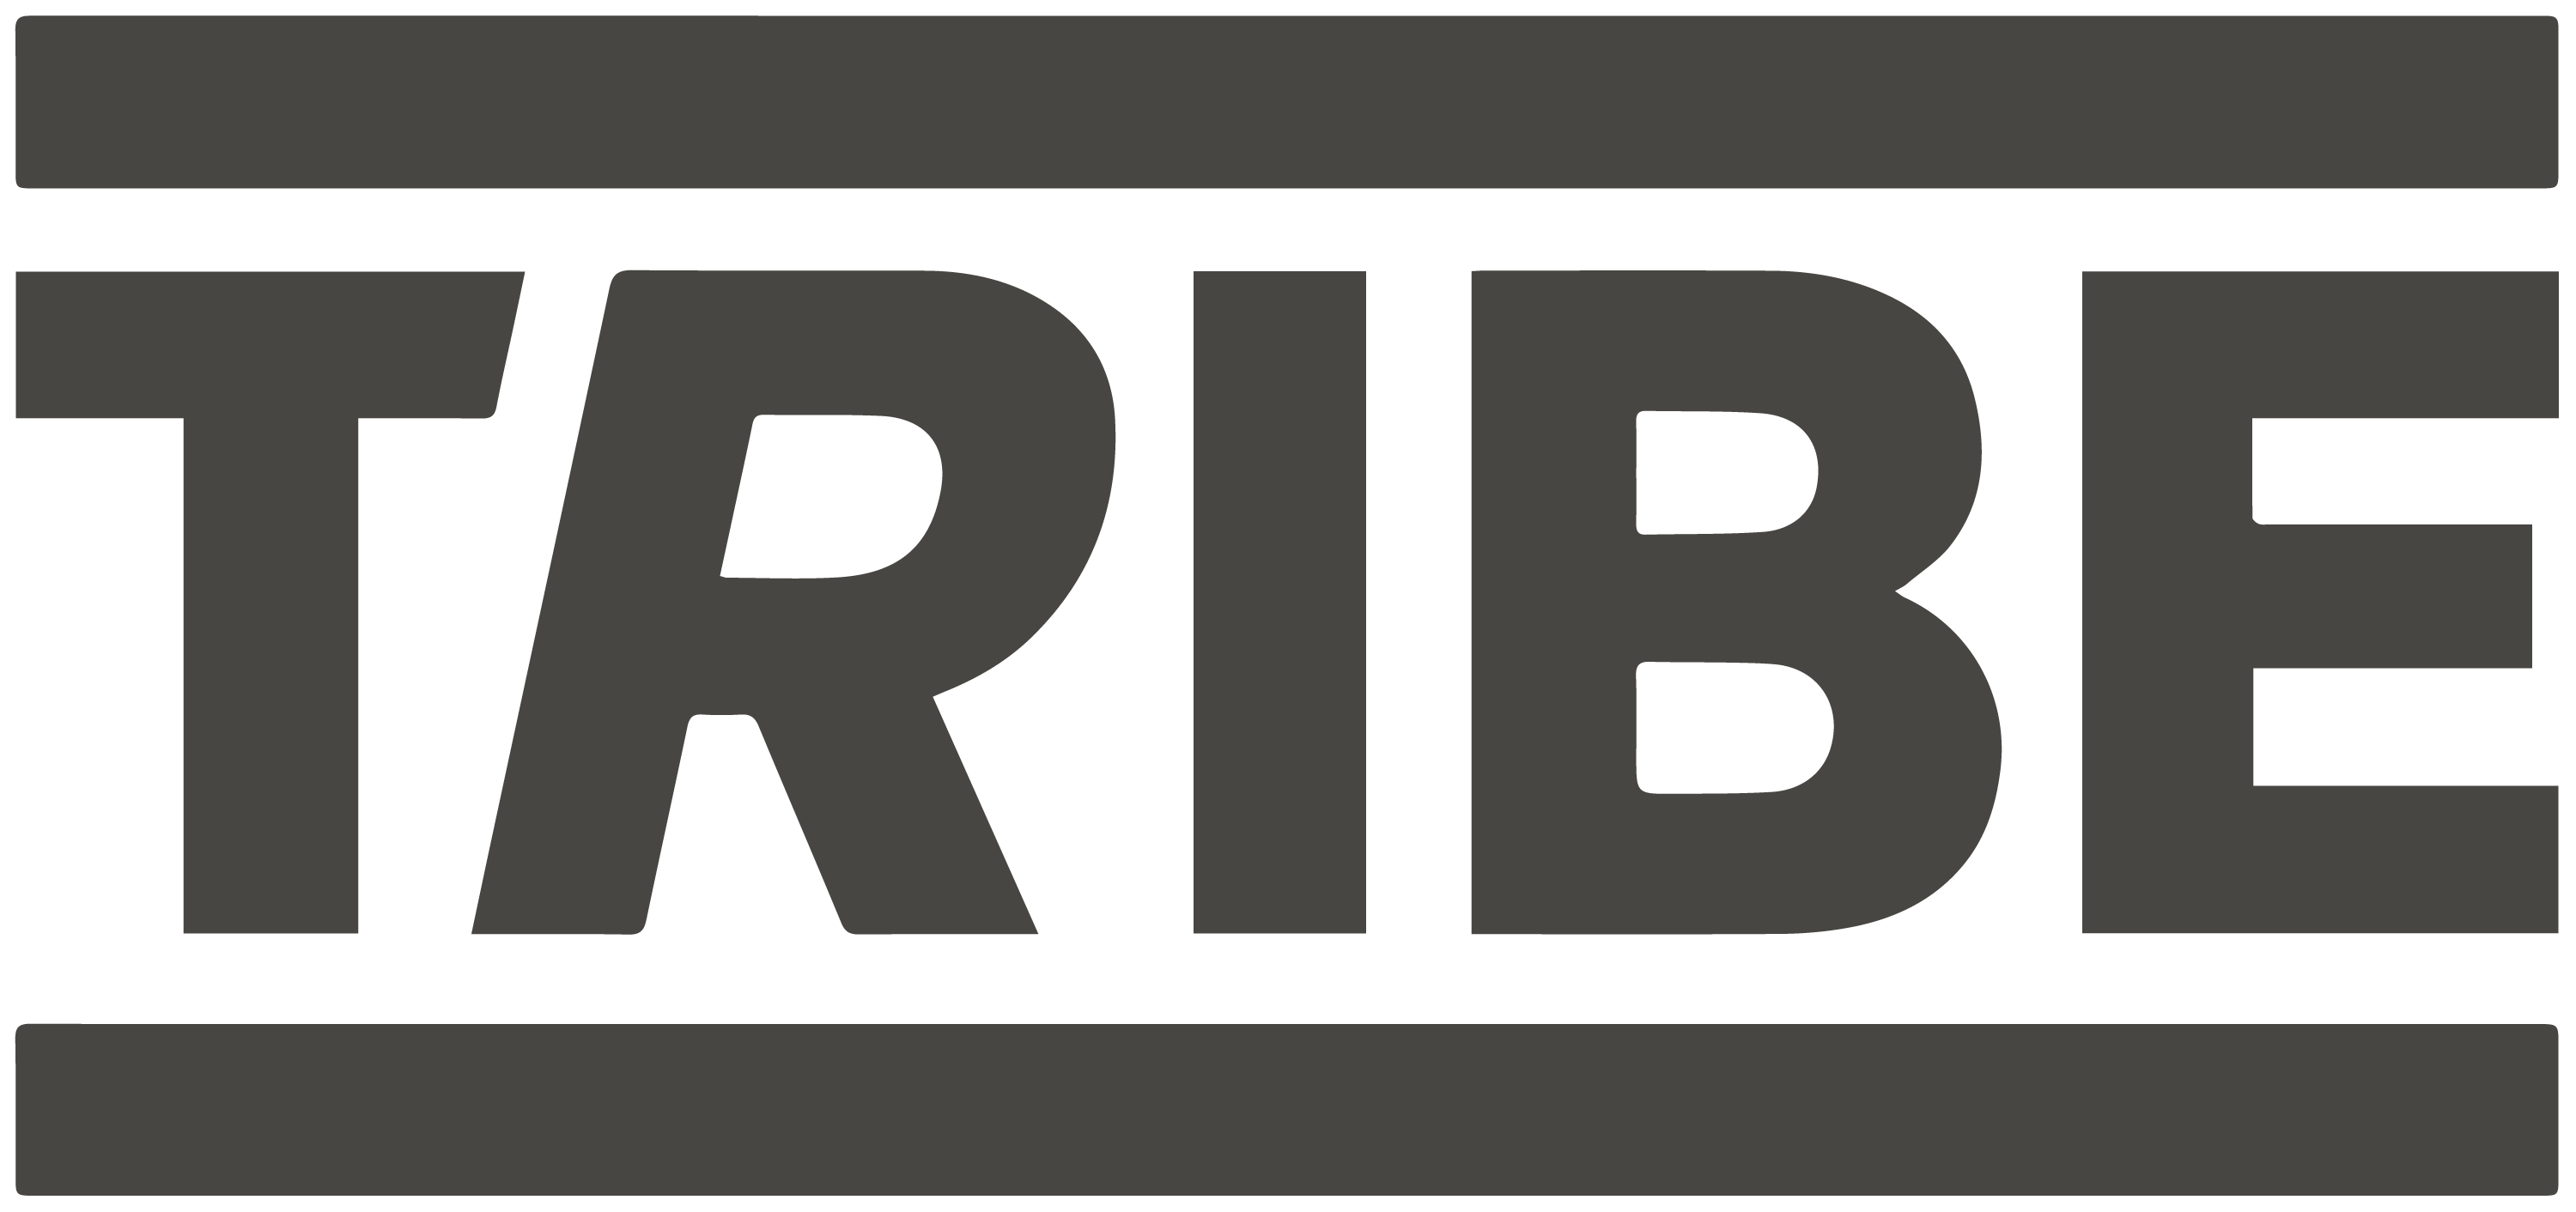 TRIBE logo